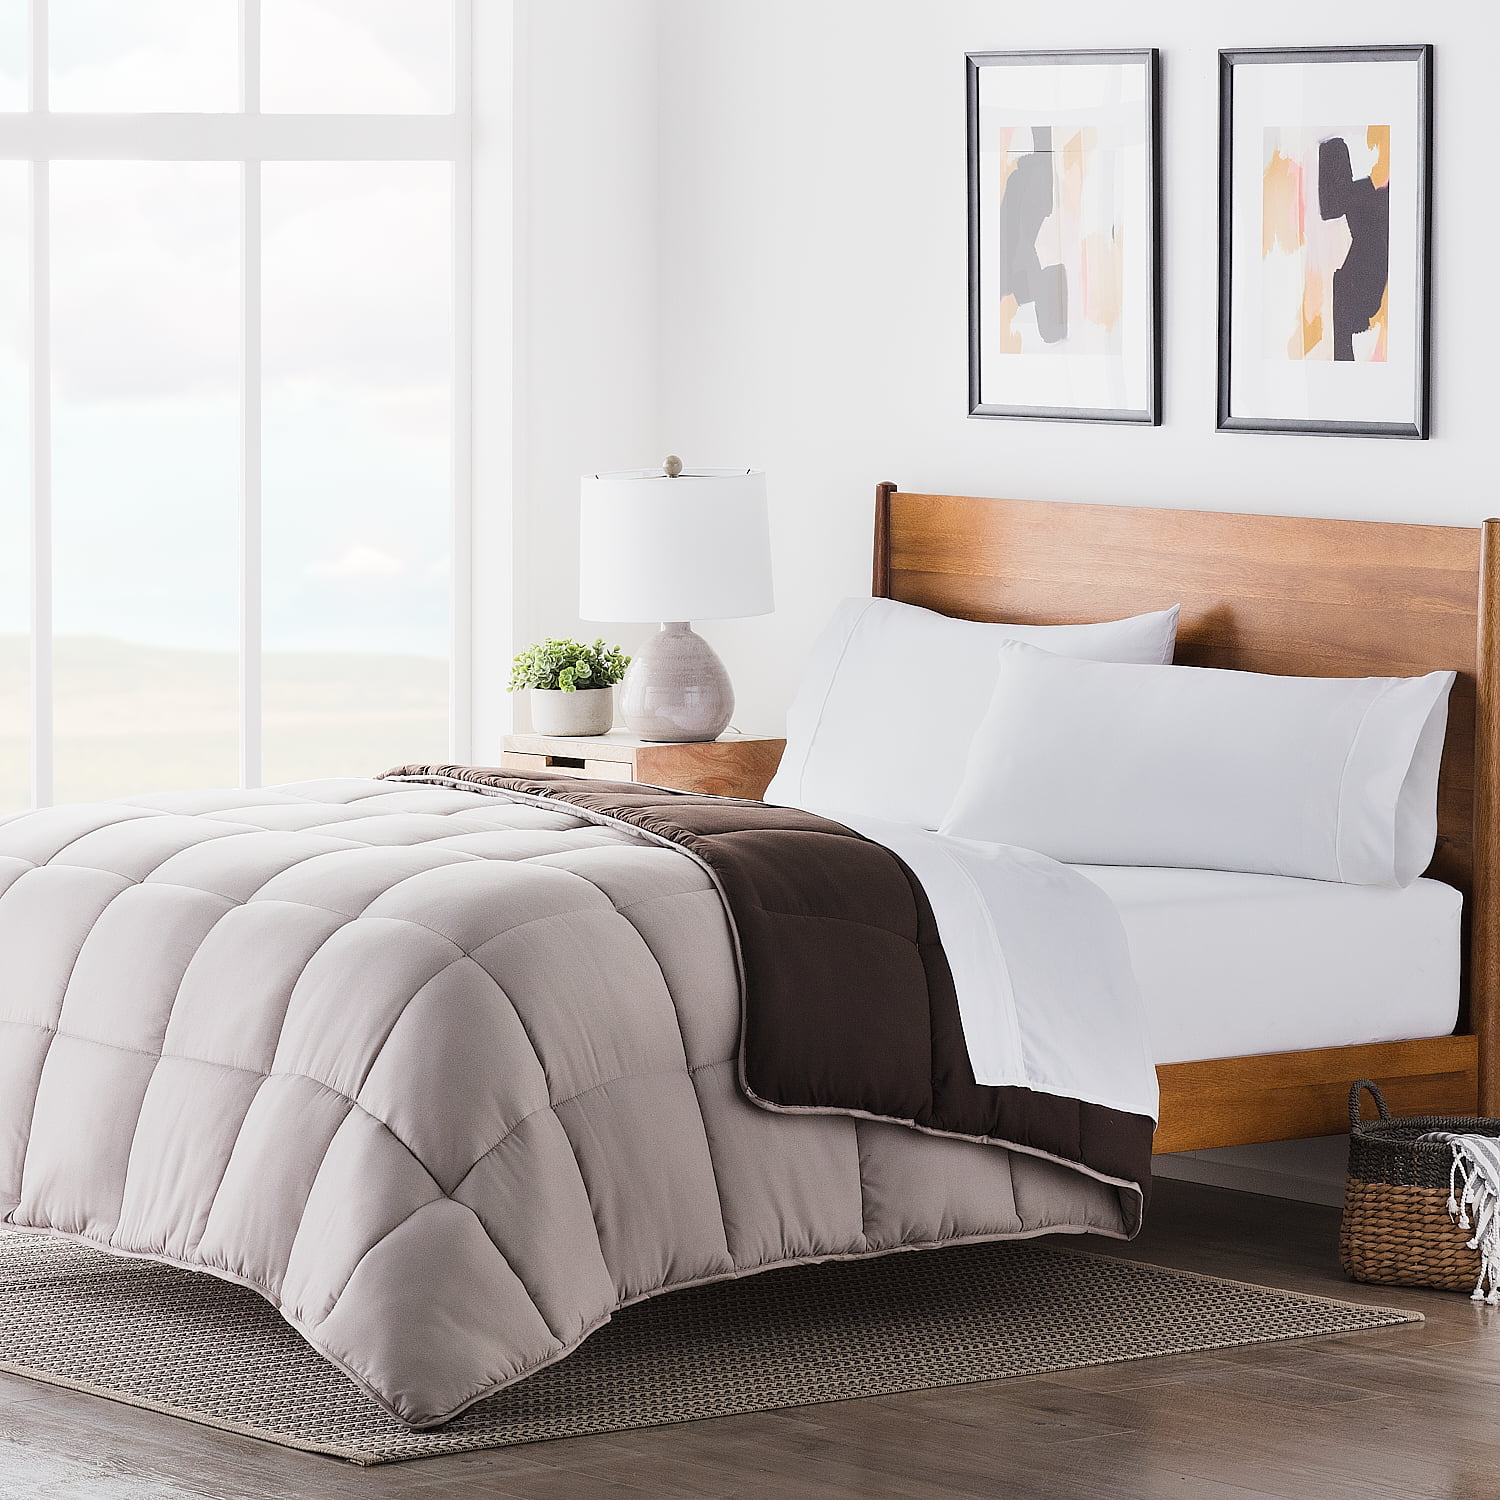 Details about   Cozynight Soft King Size Quilted Comforter Duvet Insert-Lightweight Down Alterna 